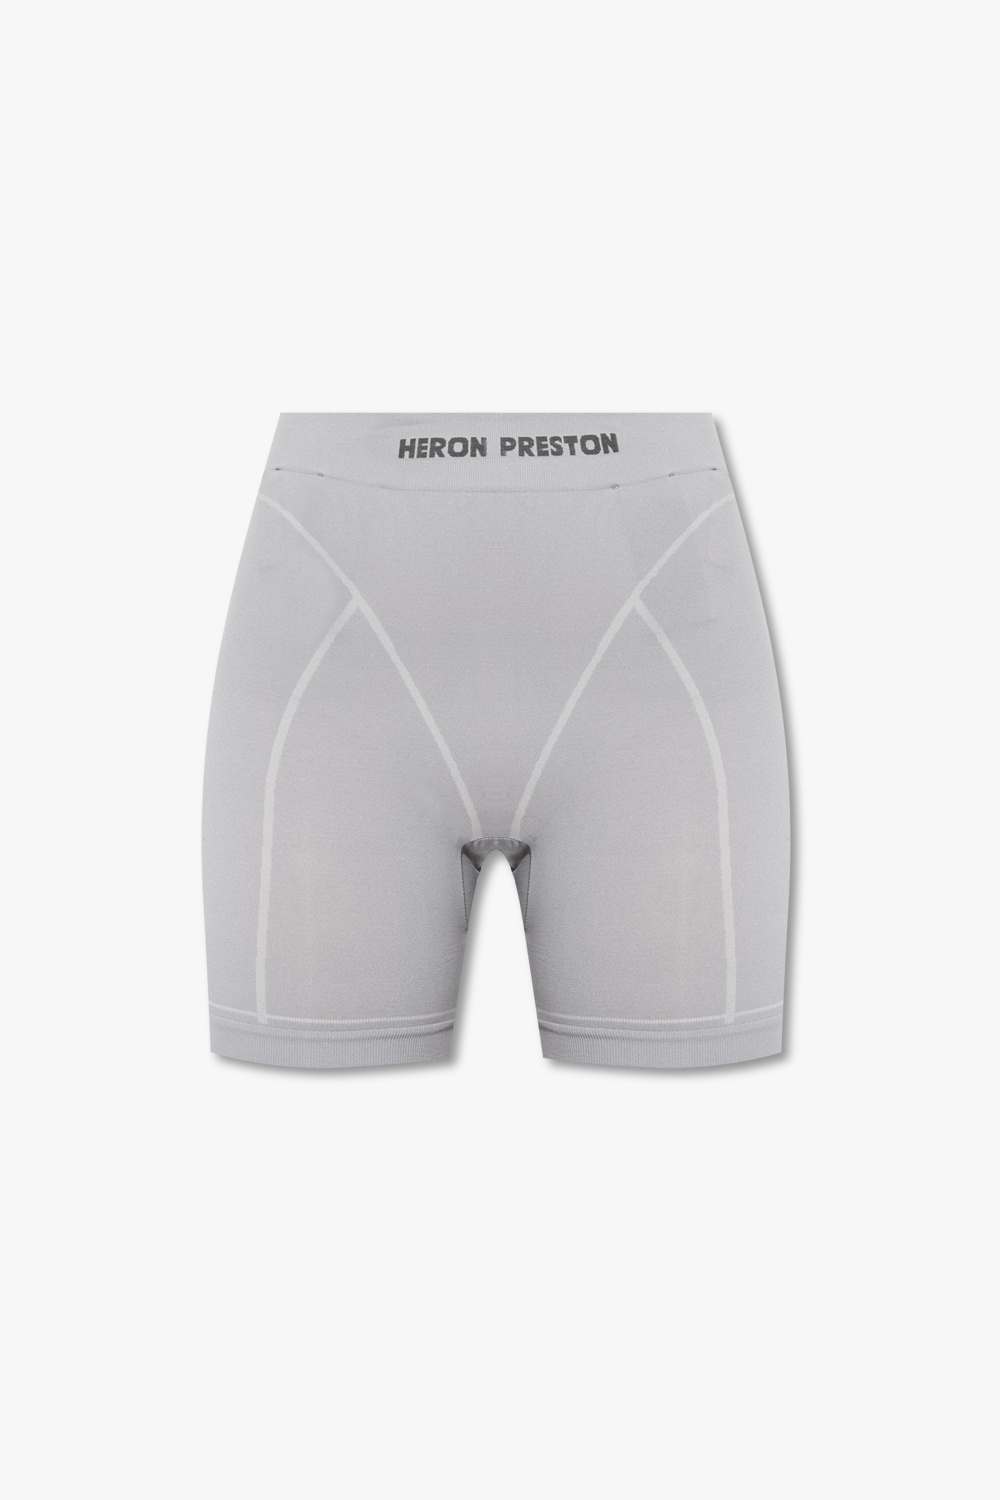 Heron Preston Short sports leggings, GenesinlifeShops, PUMA T-shirt  bianca con logo piccolo sul petto